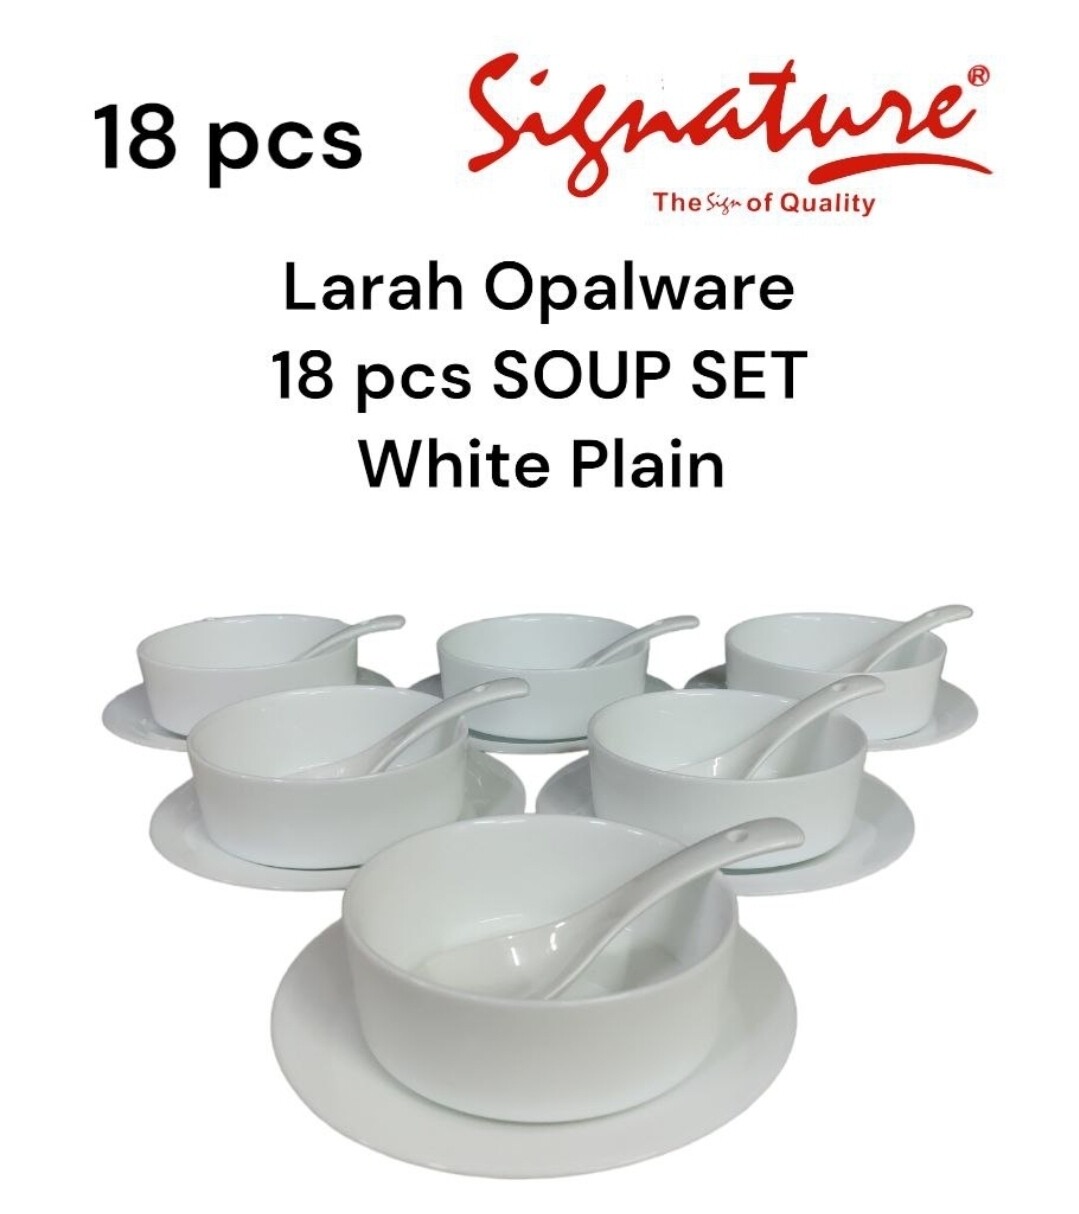 Signature 18pcs soup set plain white